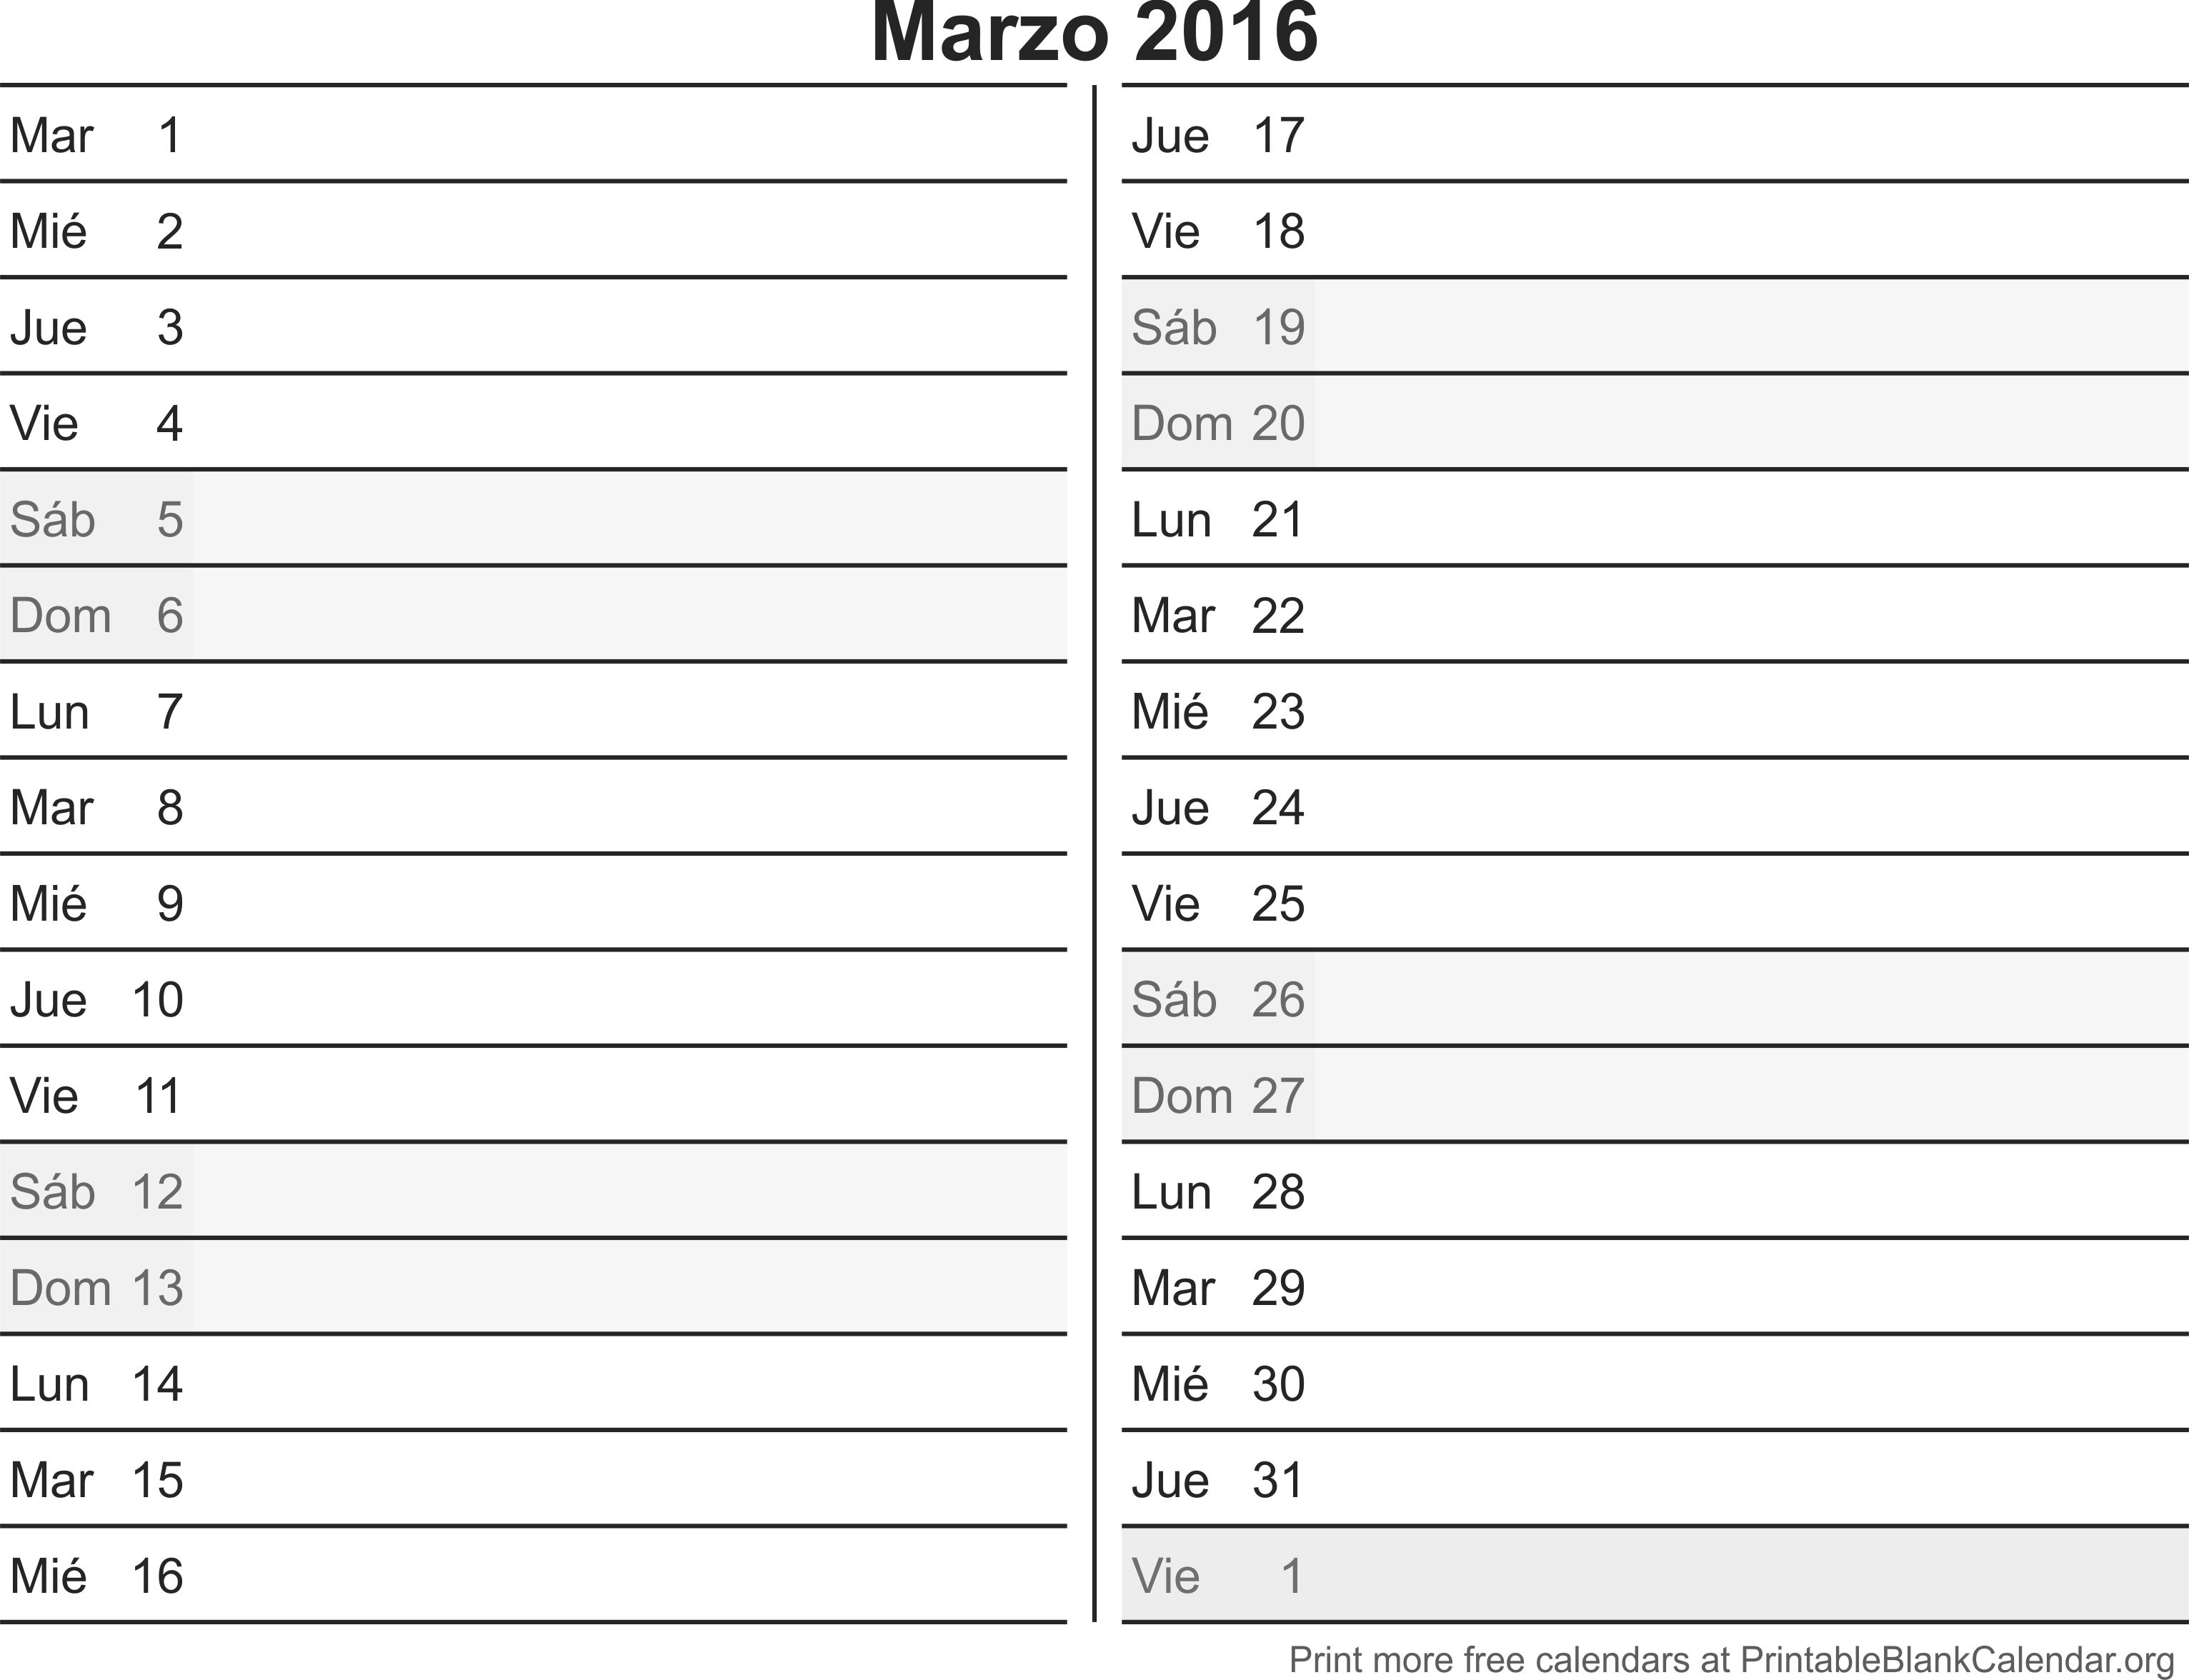 imprimir-calendario-marzo-2016